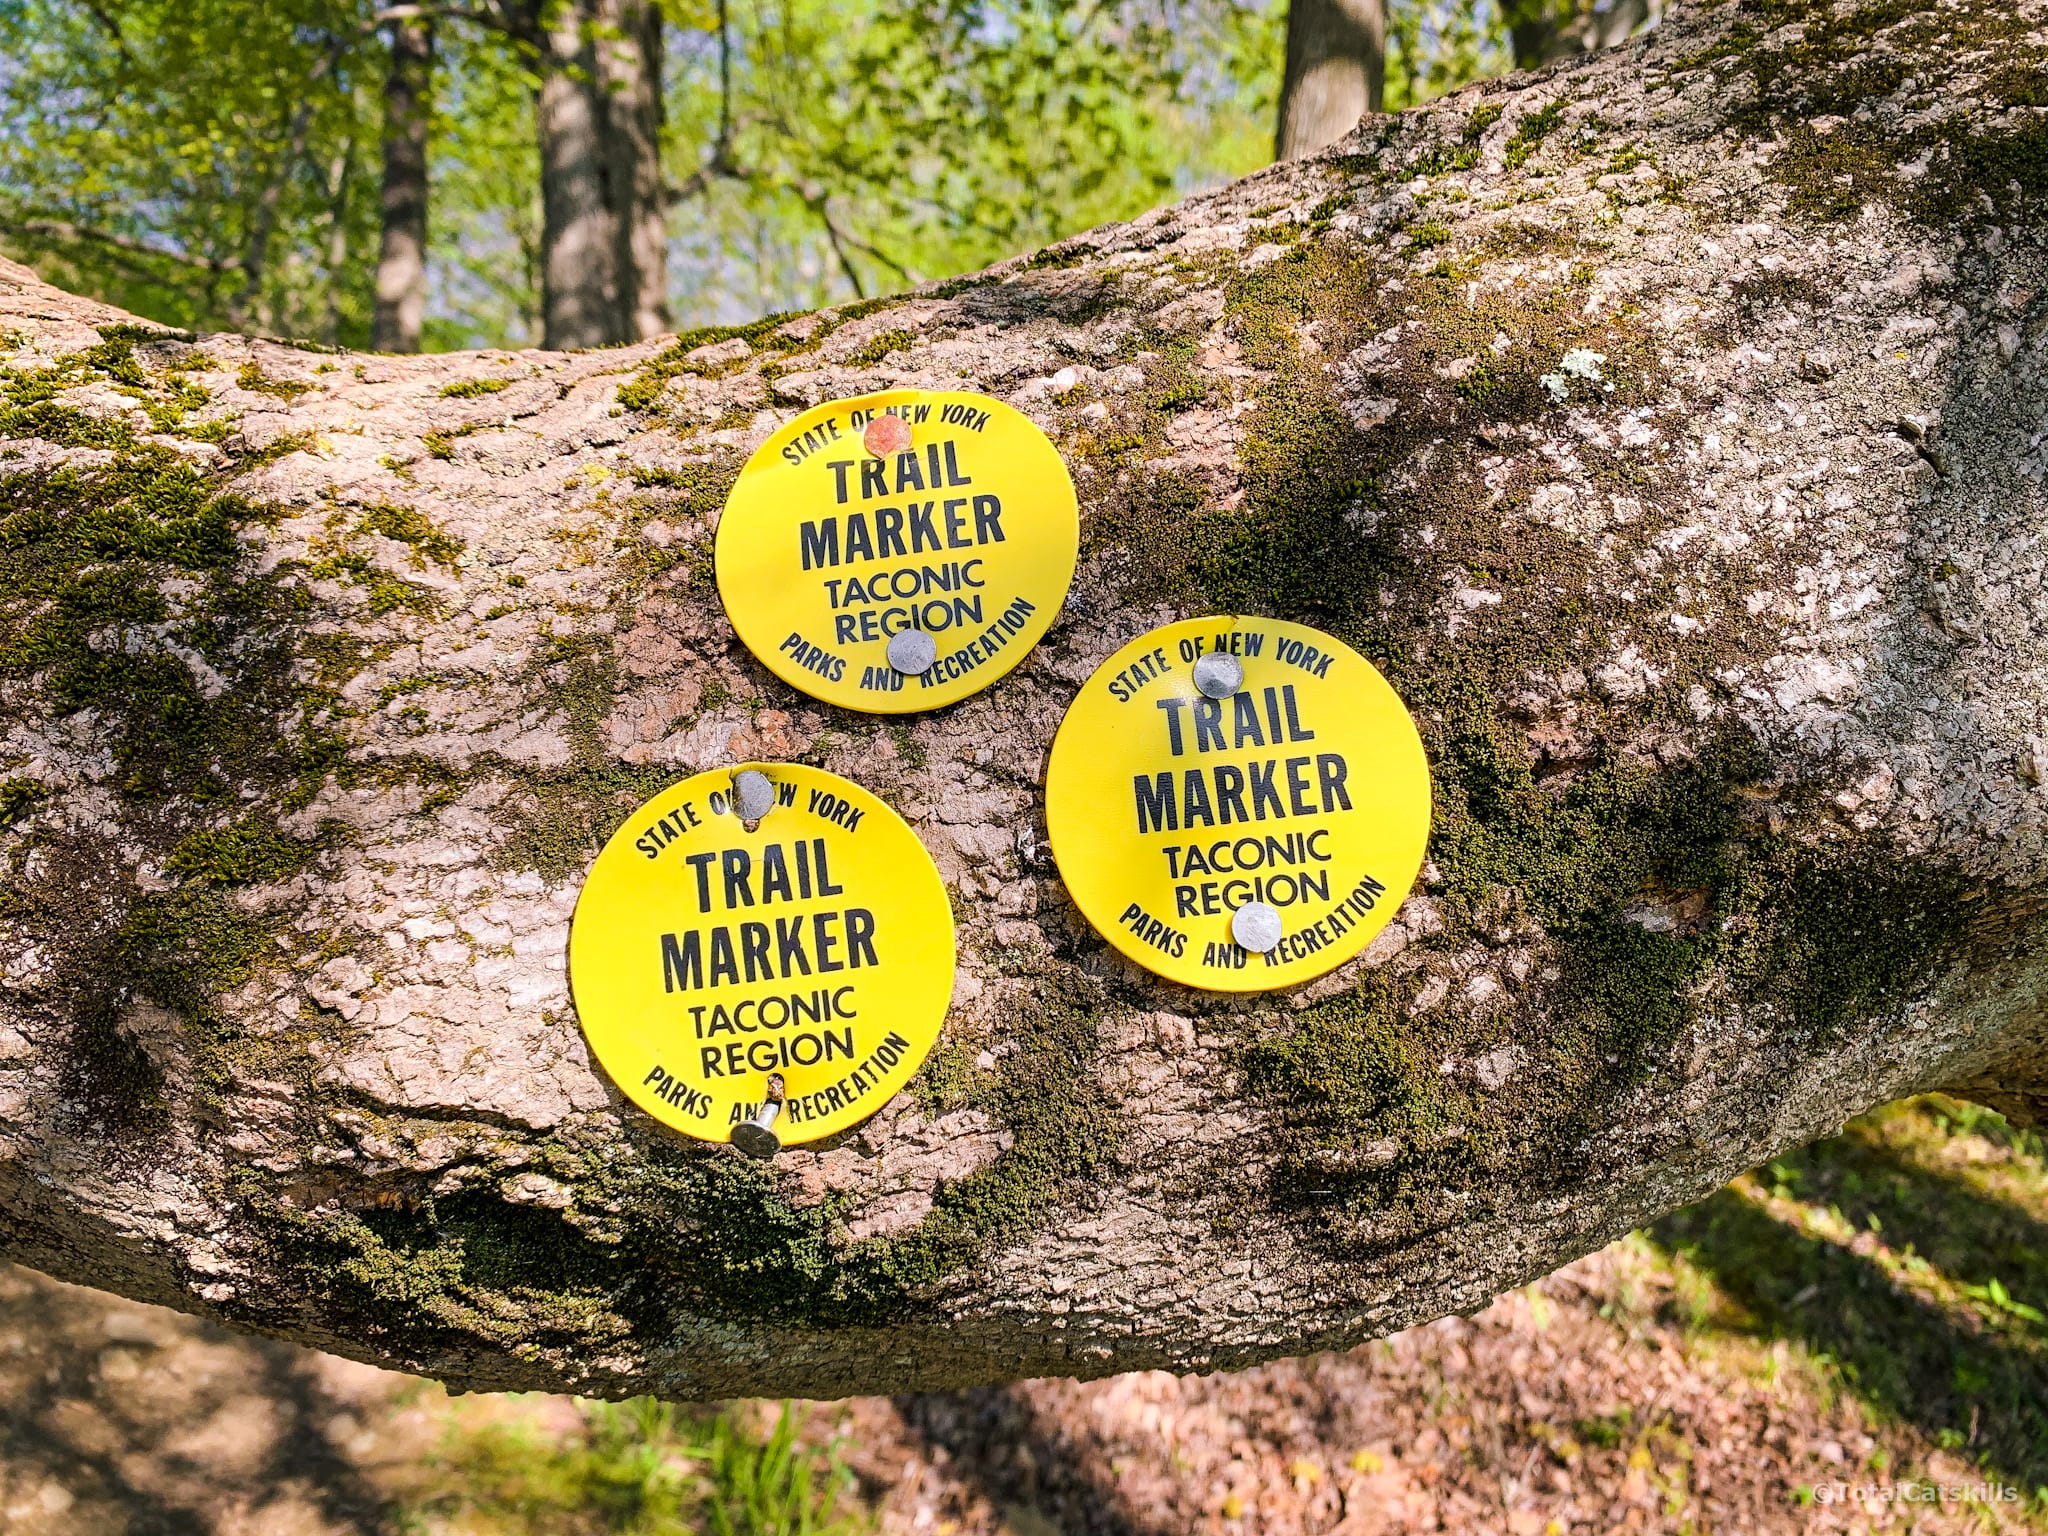 three yellow blazes on tree trunk